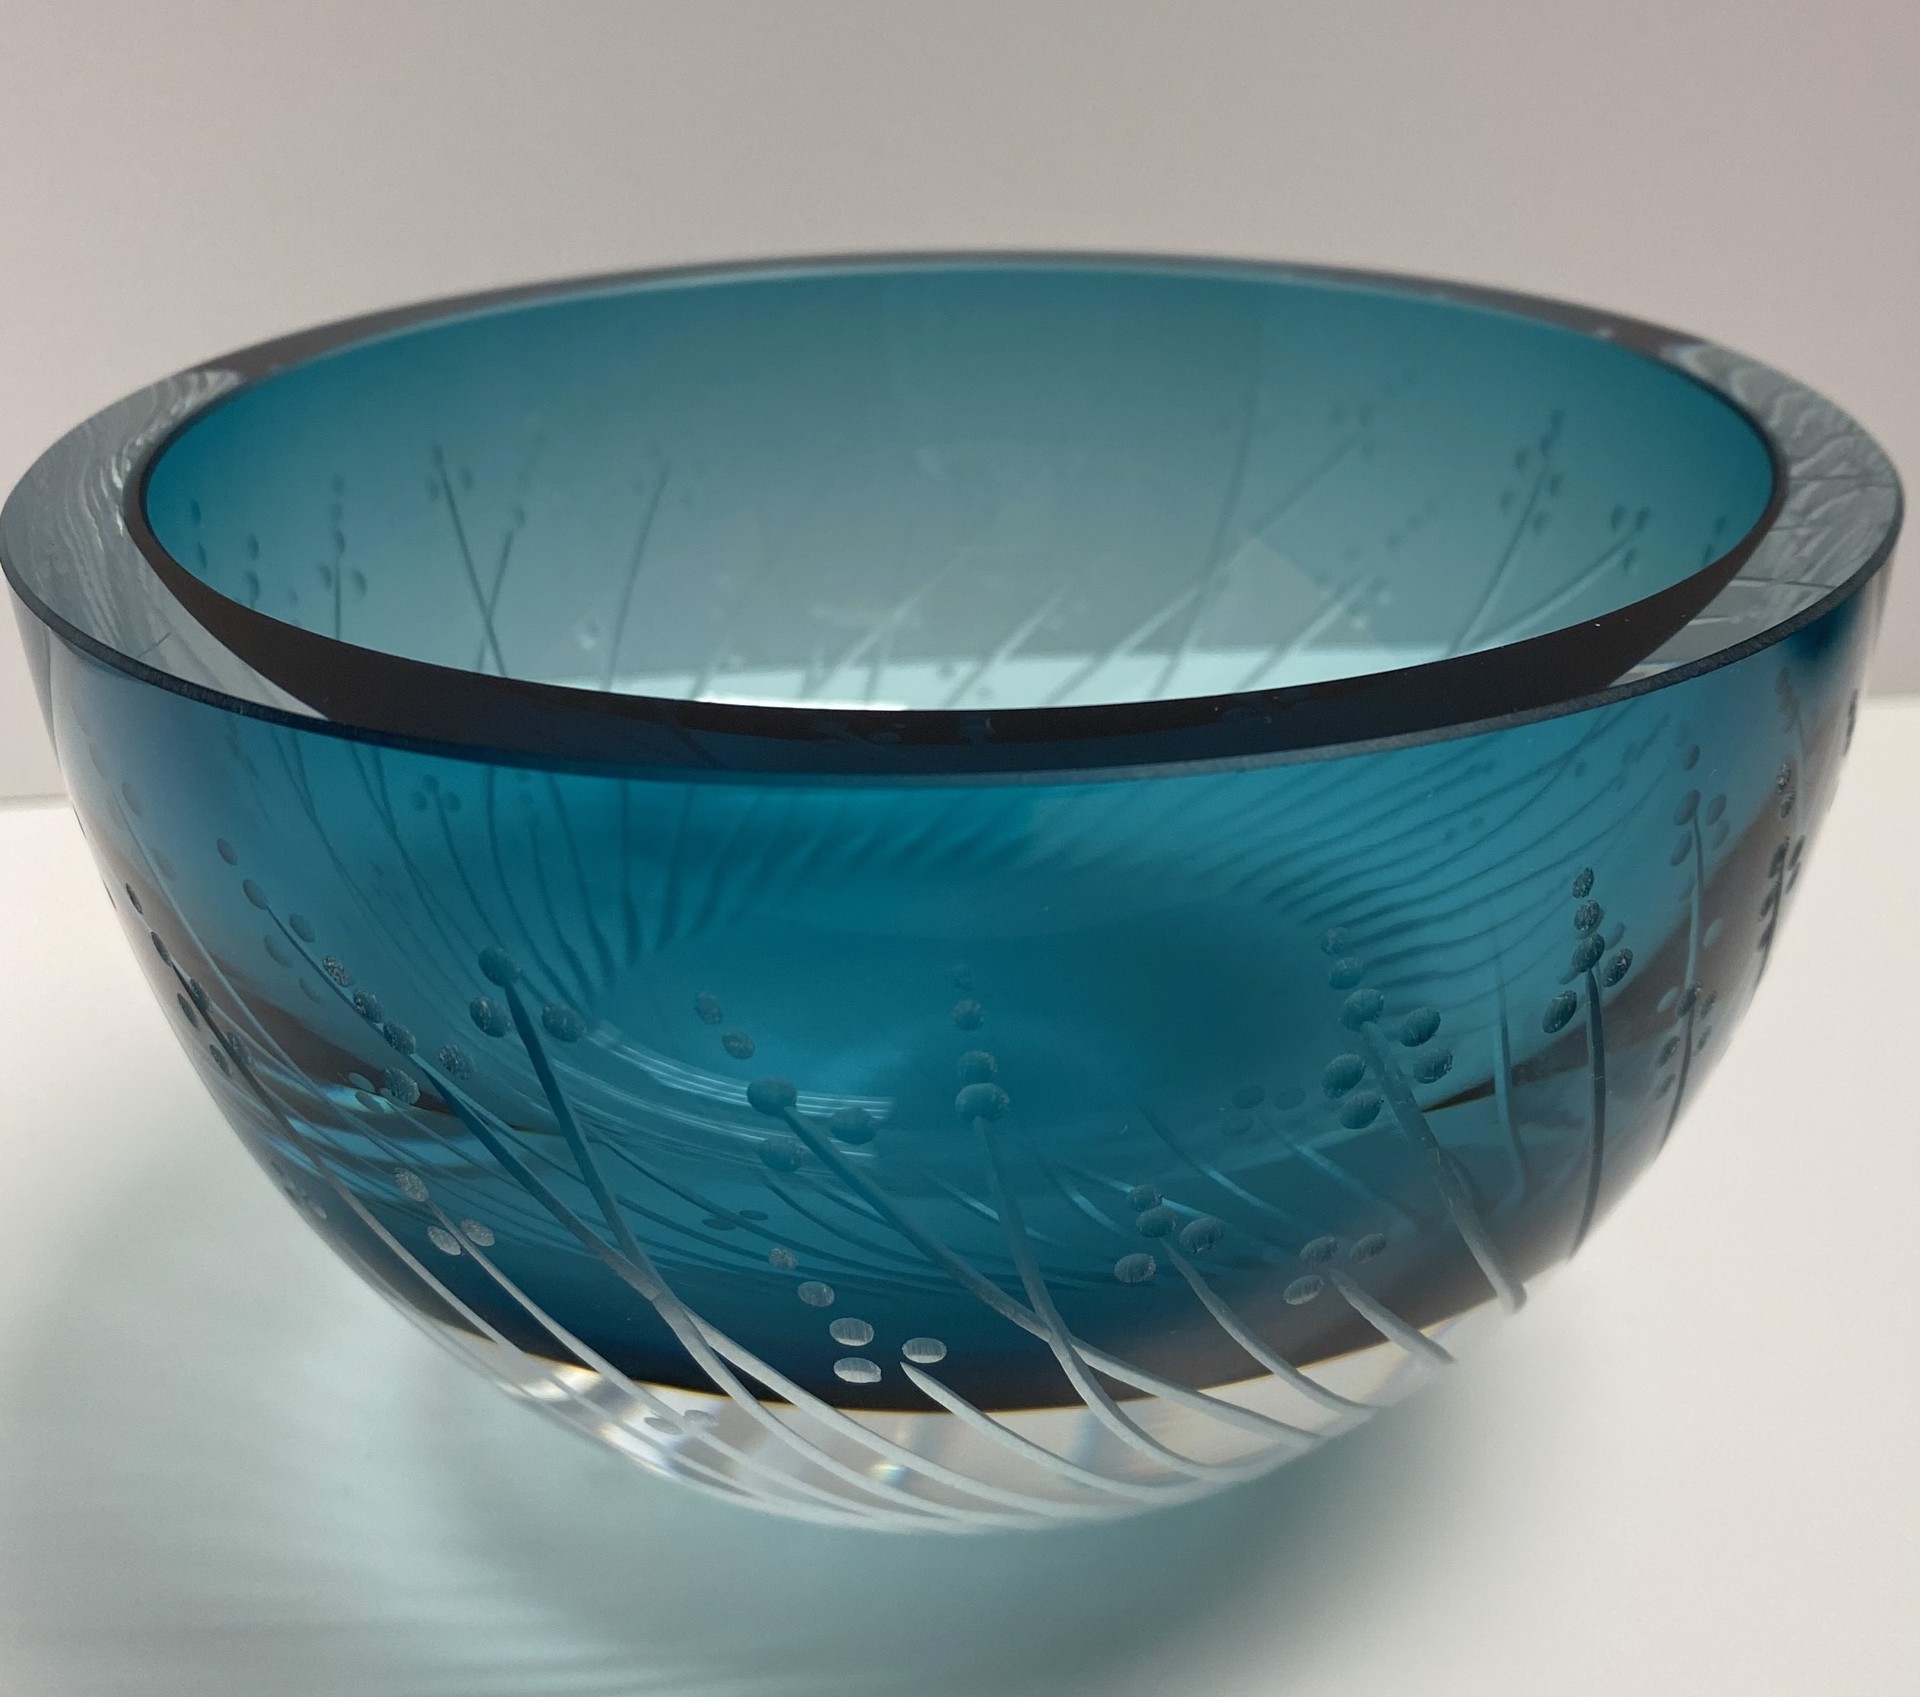 Grassline Bowl (turquoise) by Raimundas Lapsys